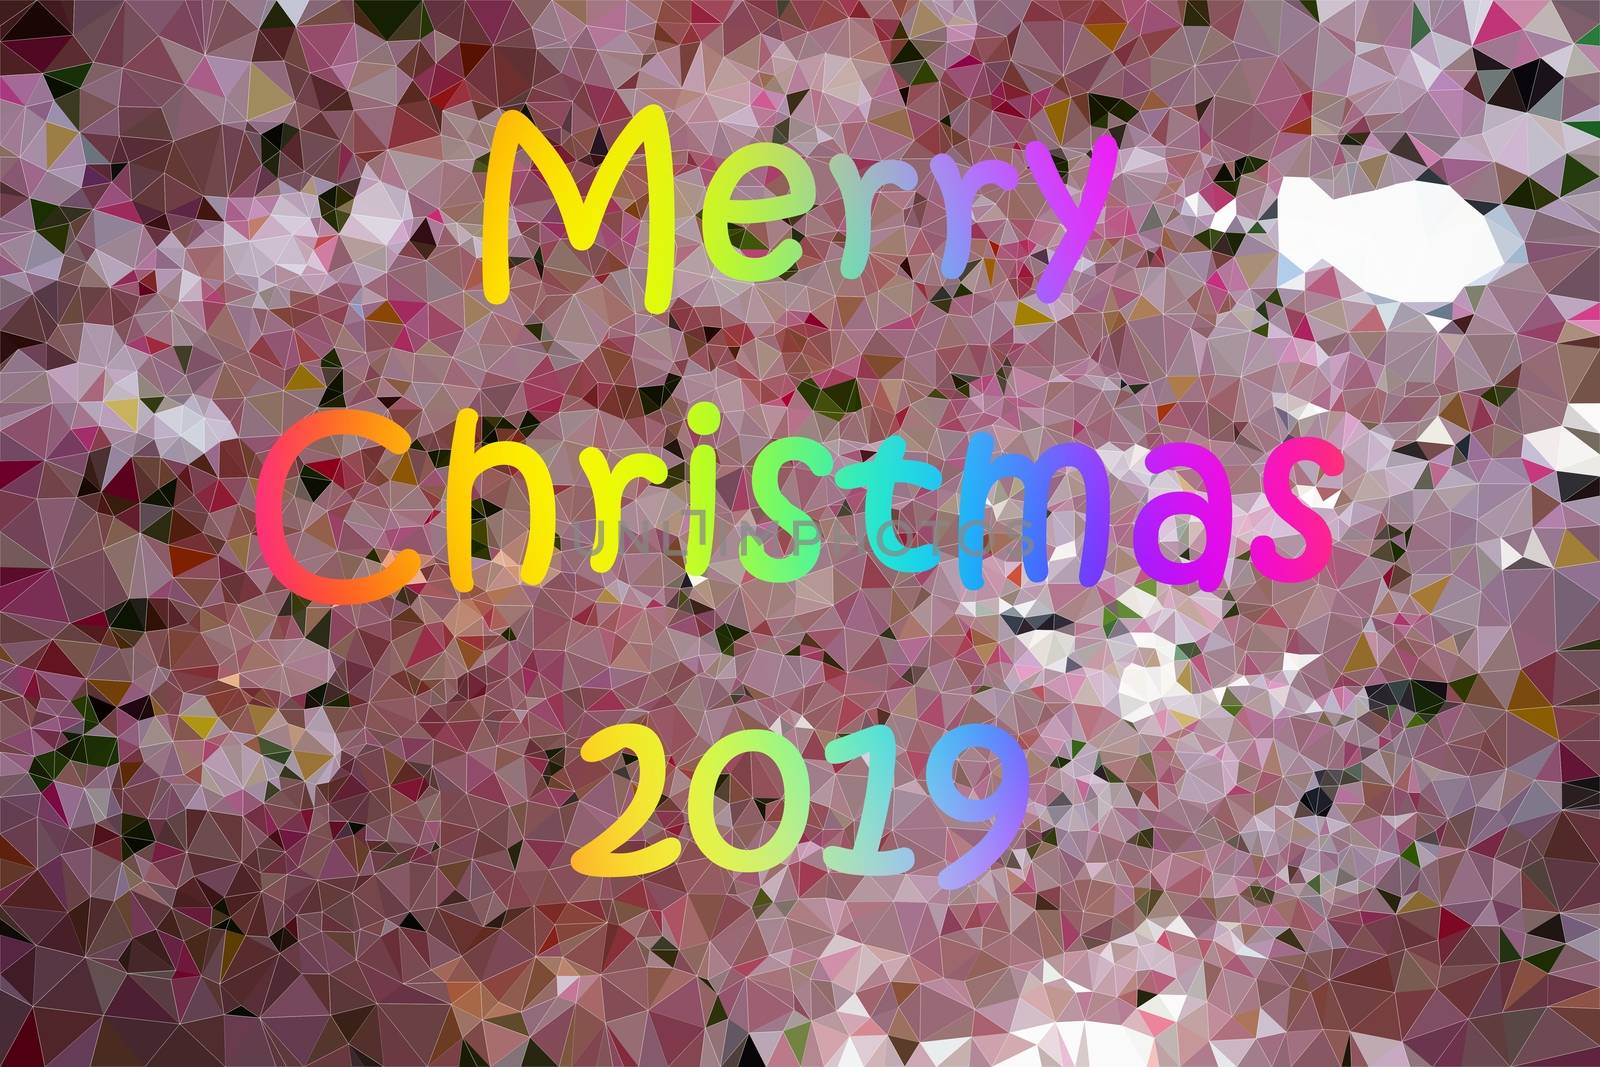 Text of Merry Christmas 2019 on fake Sakura flowers background by peerapixs